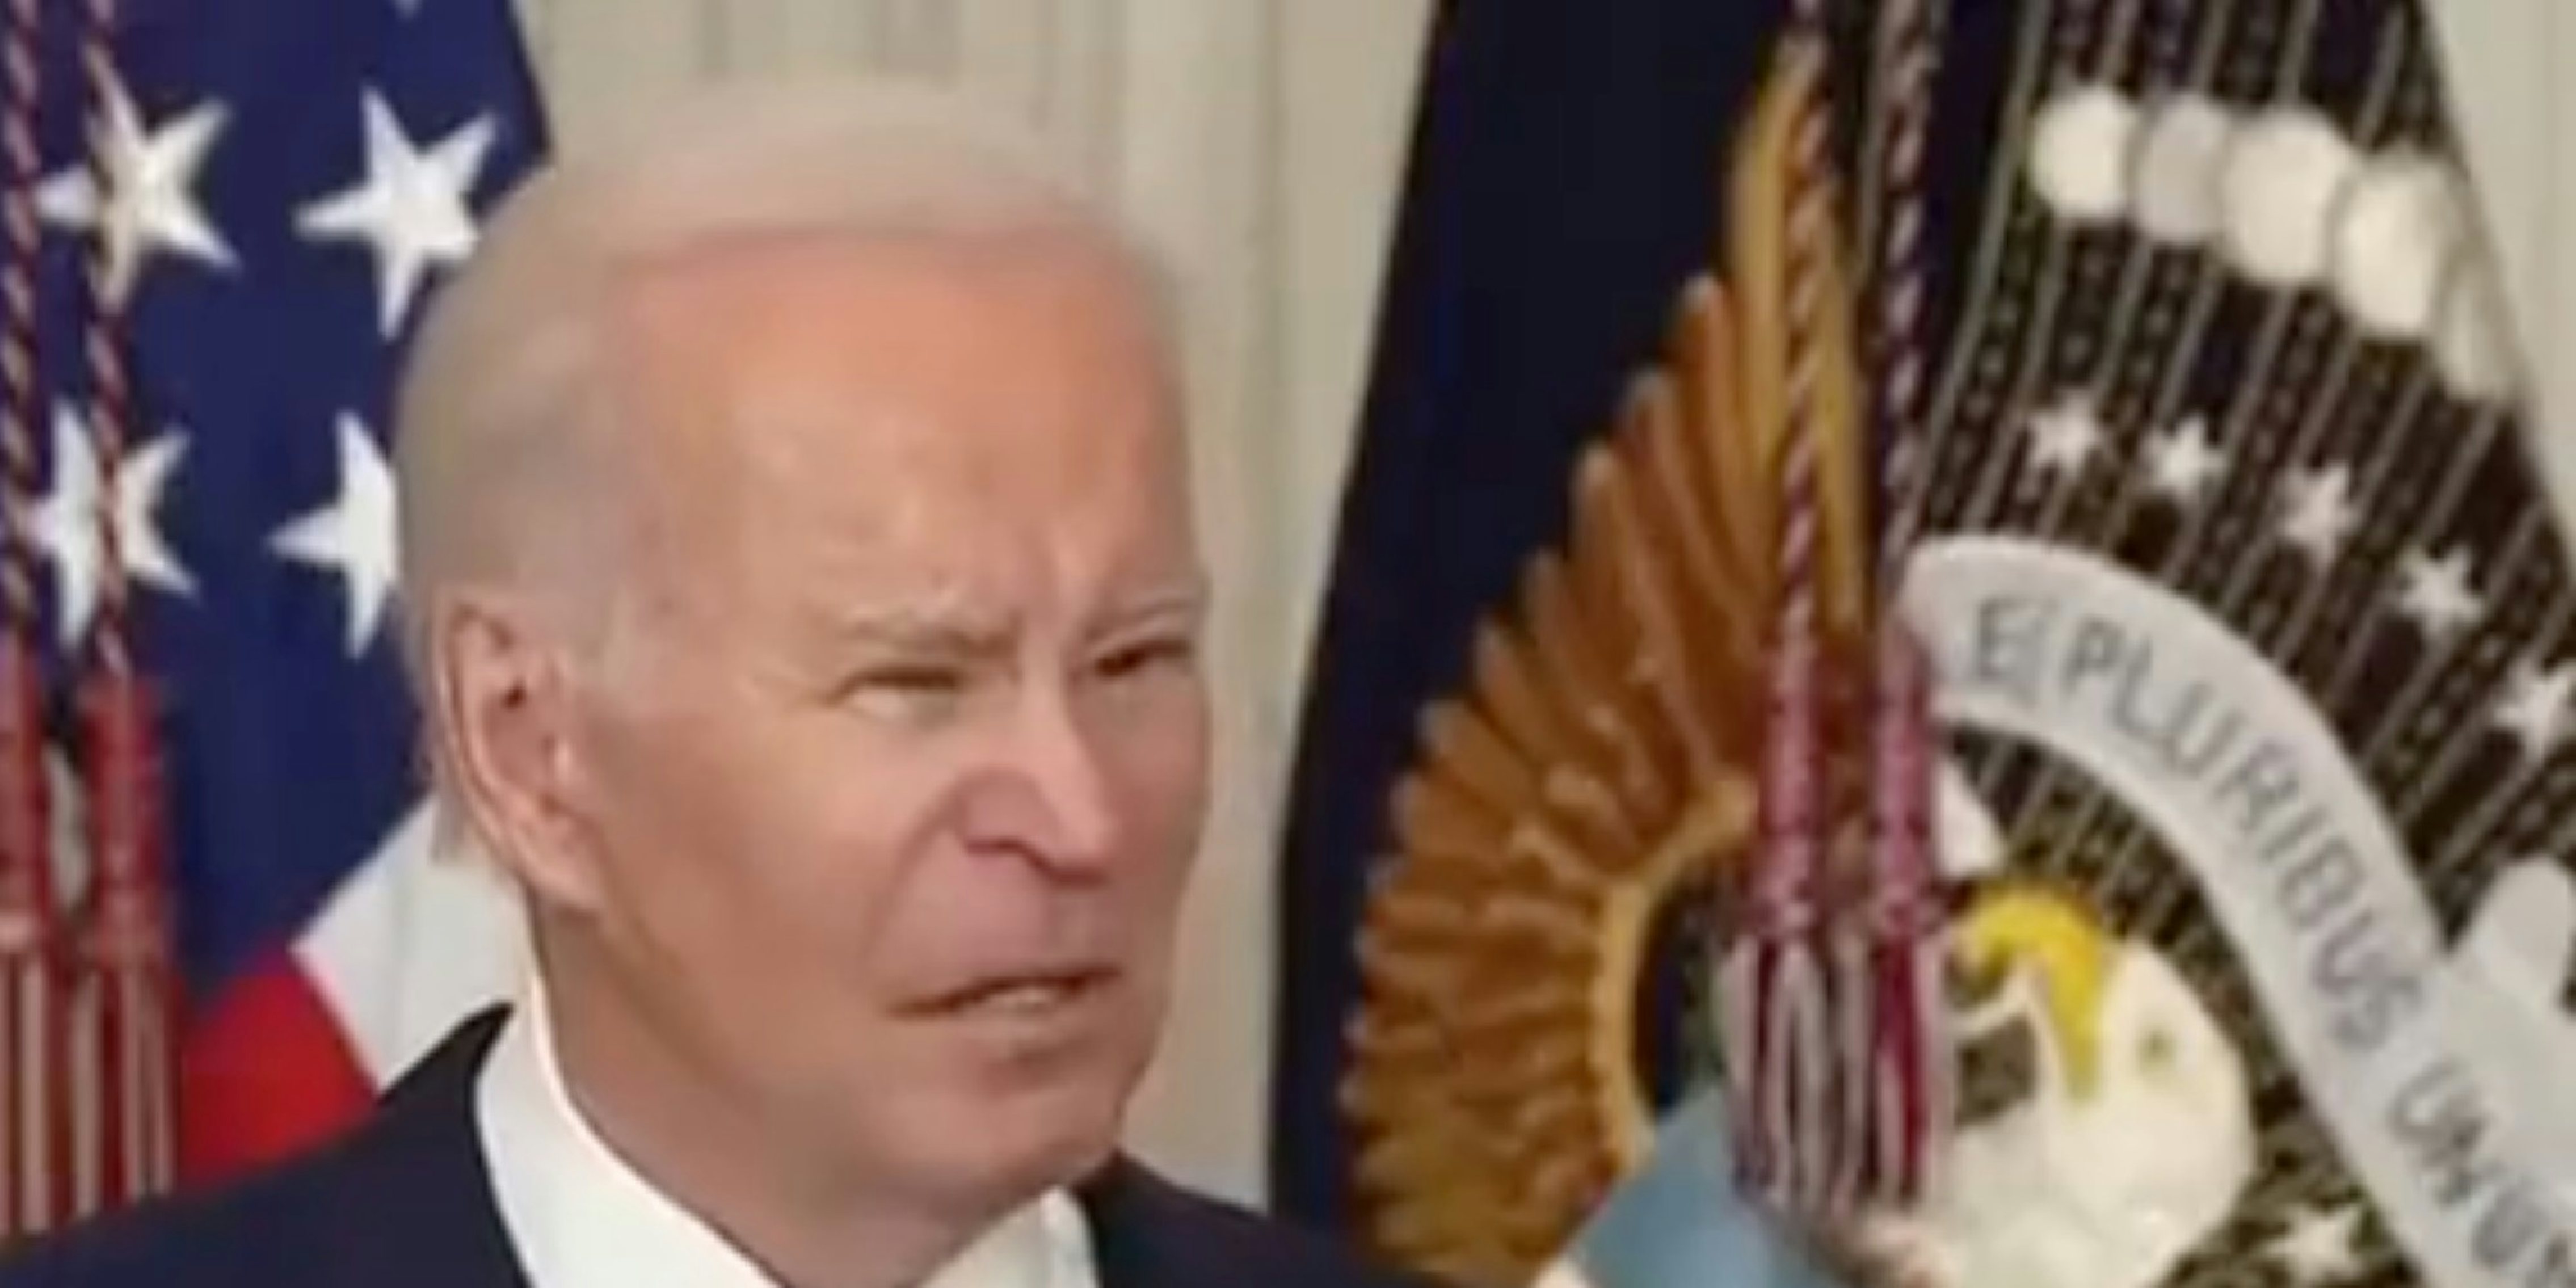 An image of President Joe Biden's face distorted